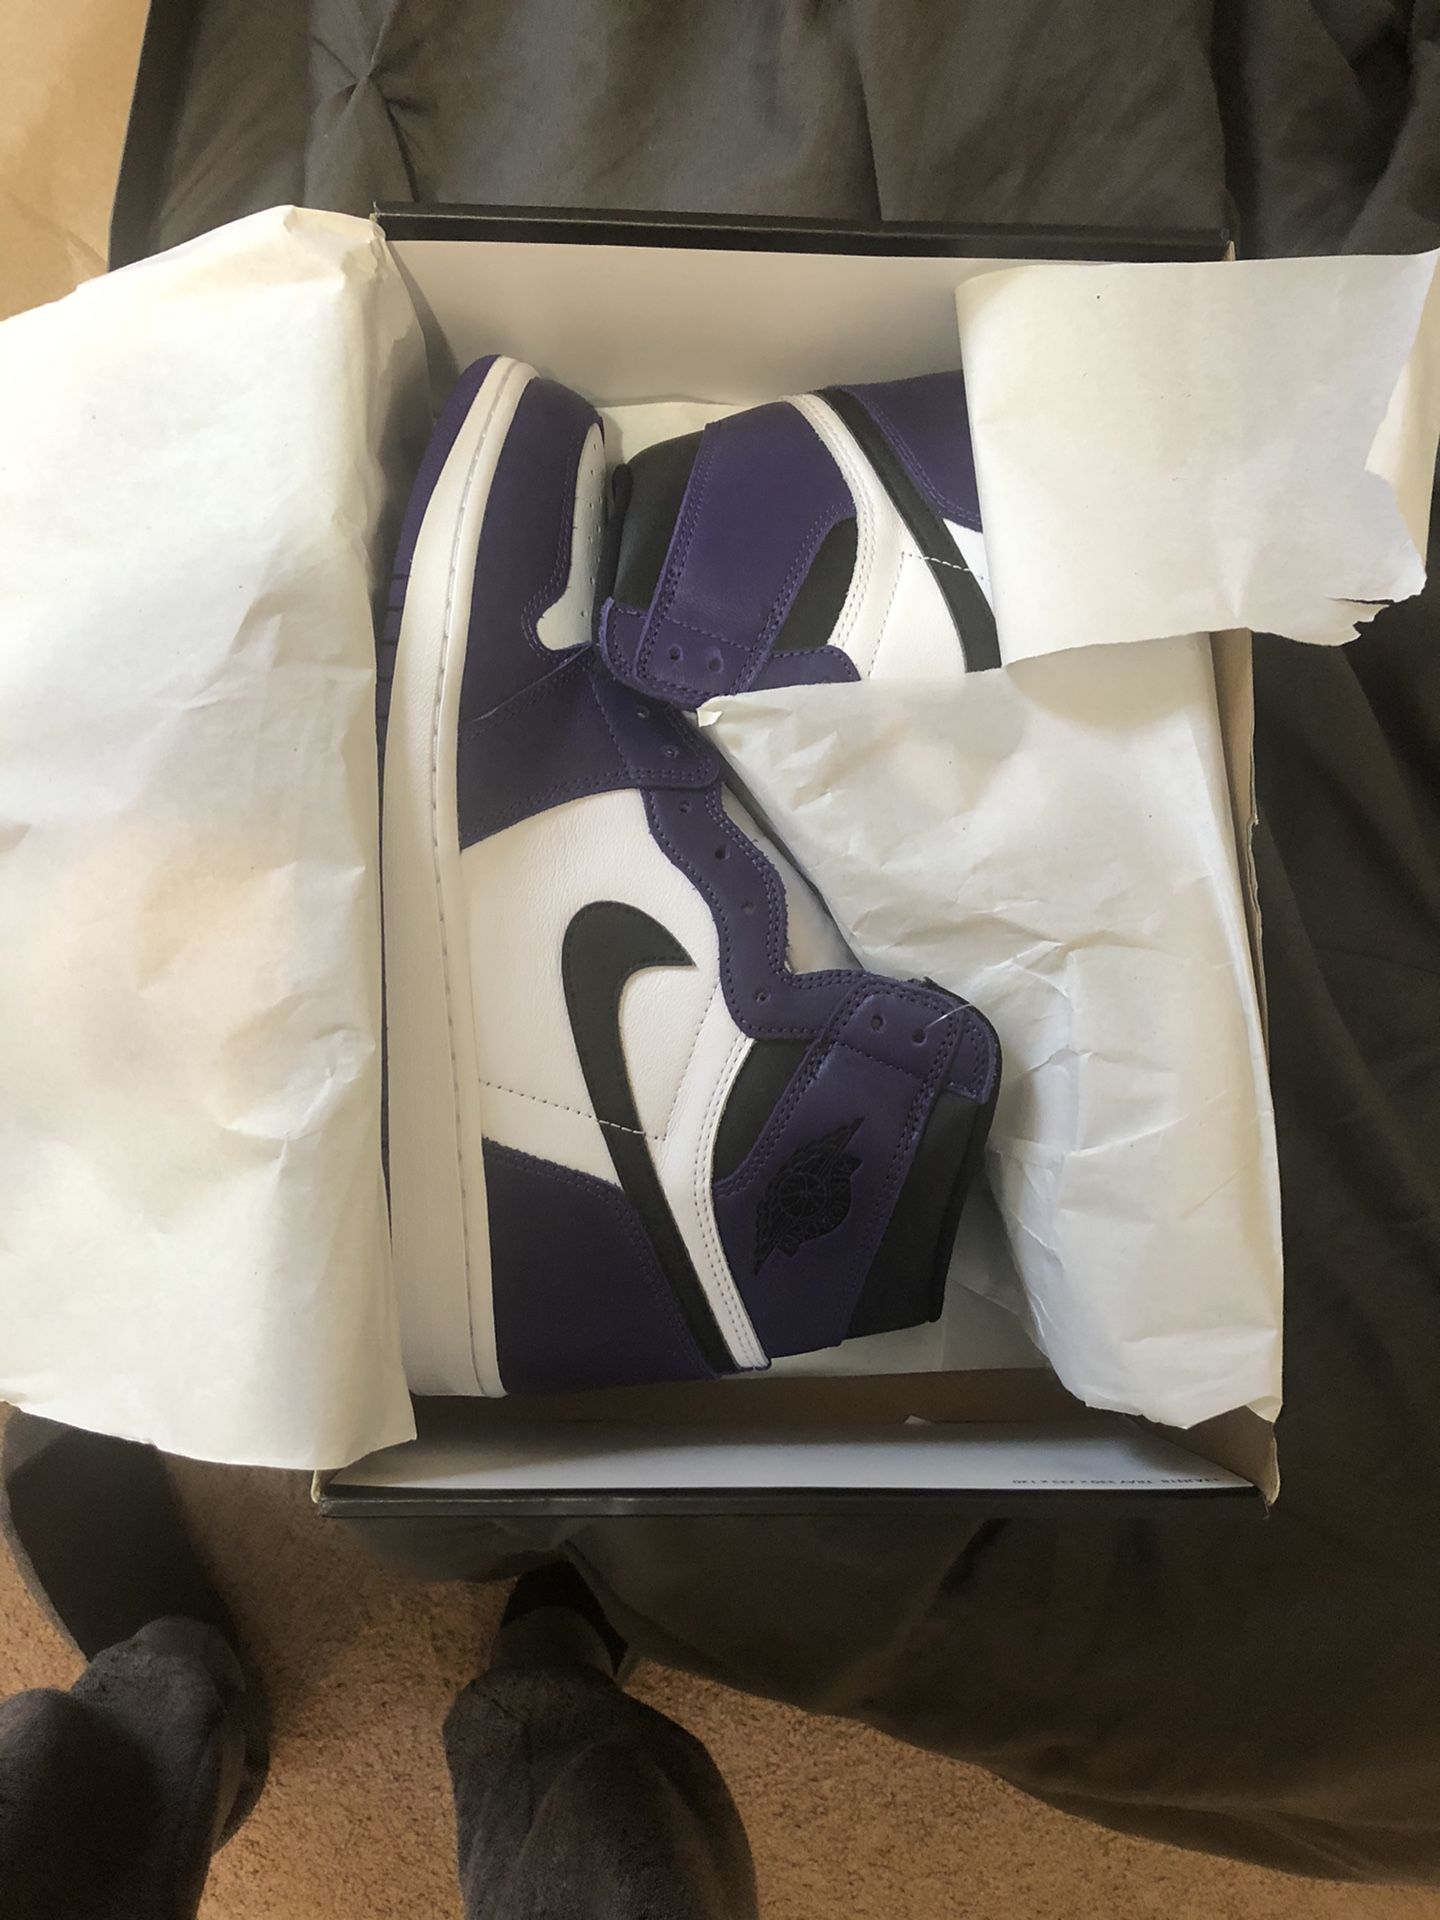 Jordan 1 Purple size 12